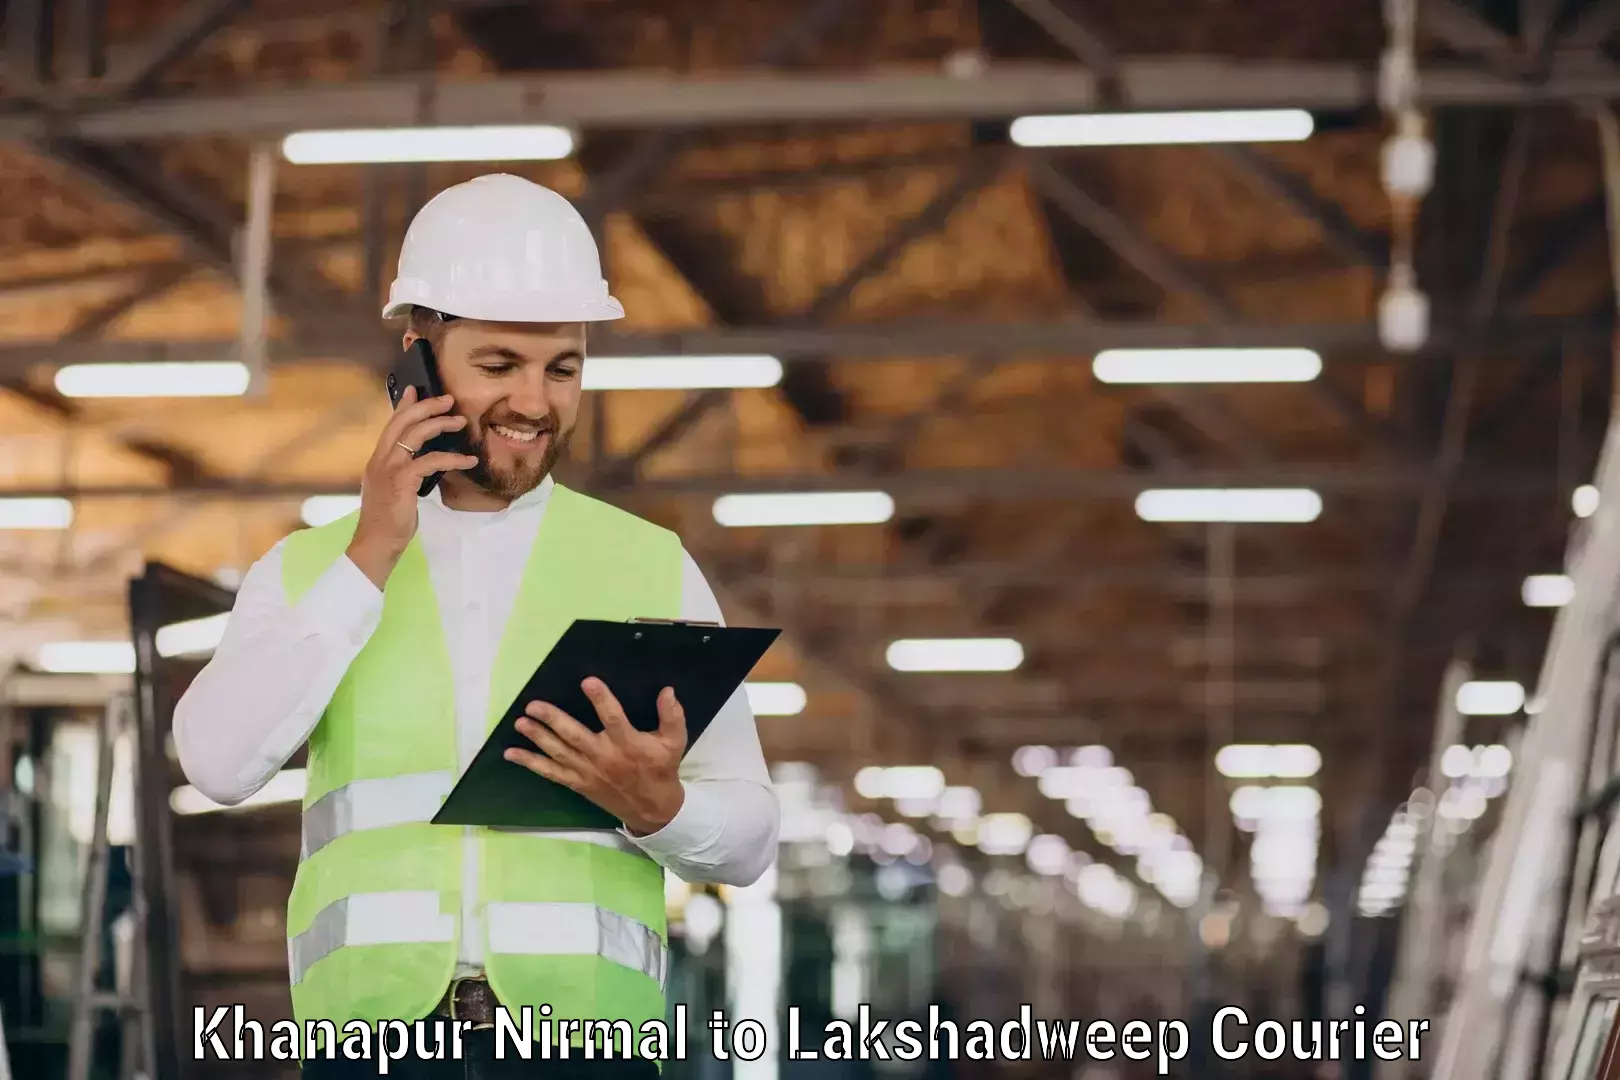 Courier service efficiency Khanapur Nirmal to Lakshadweep